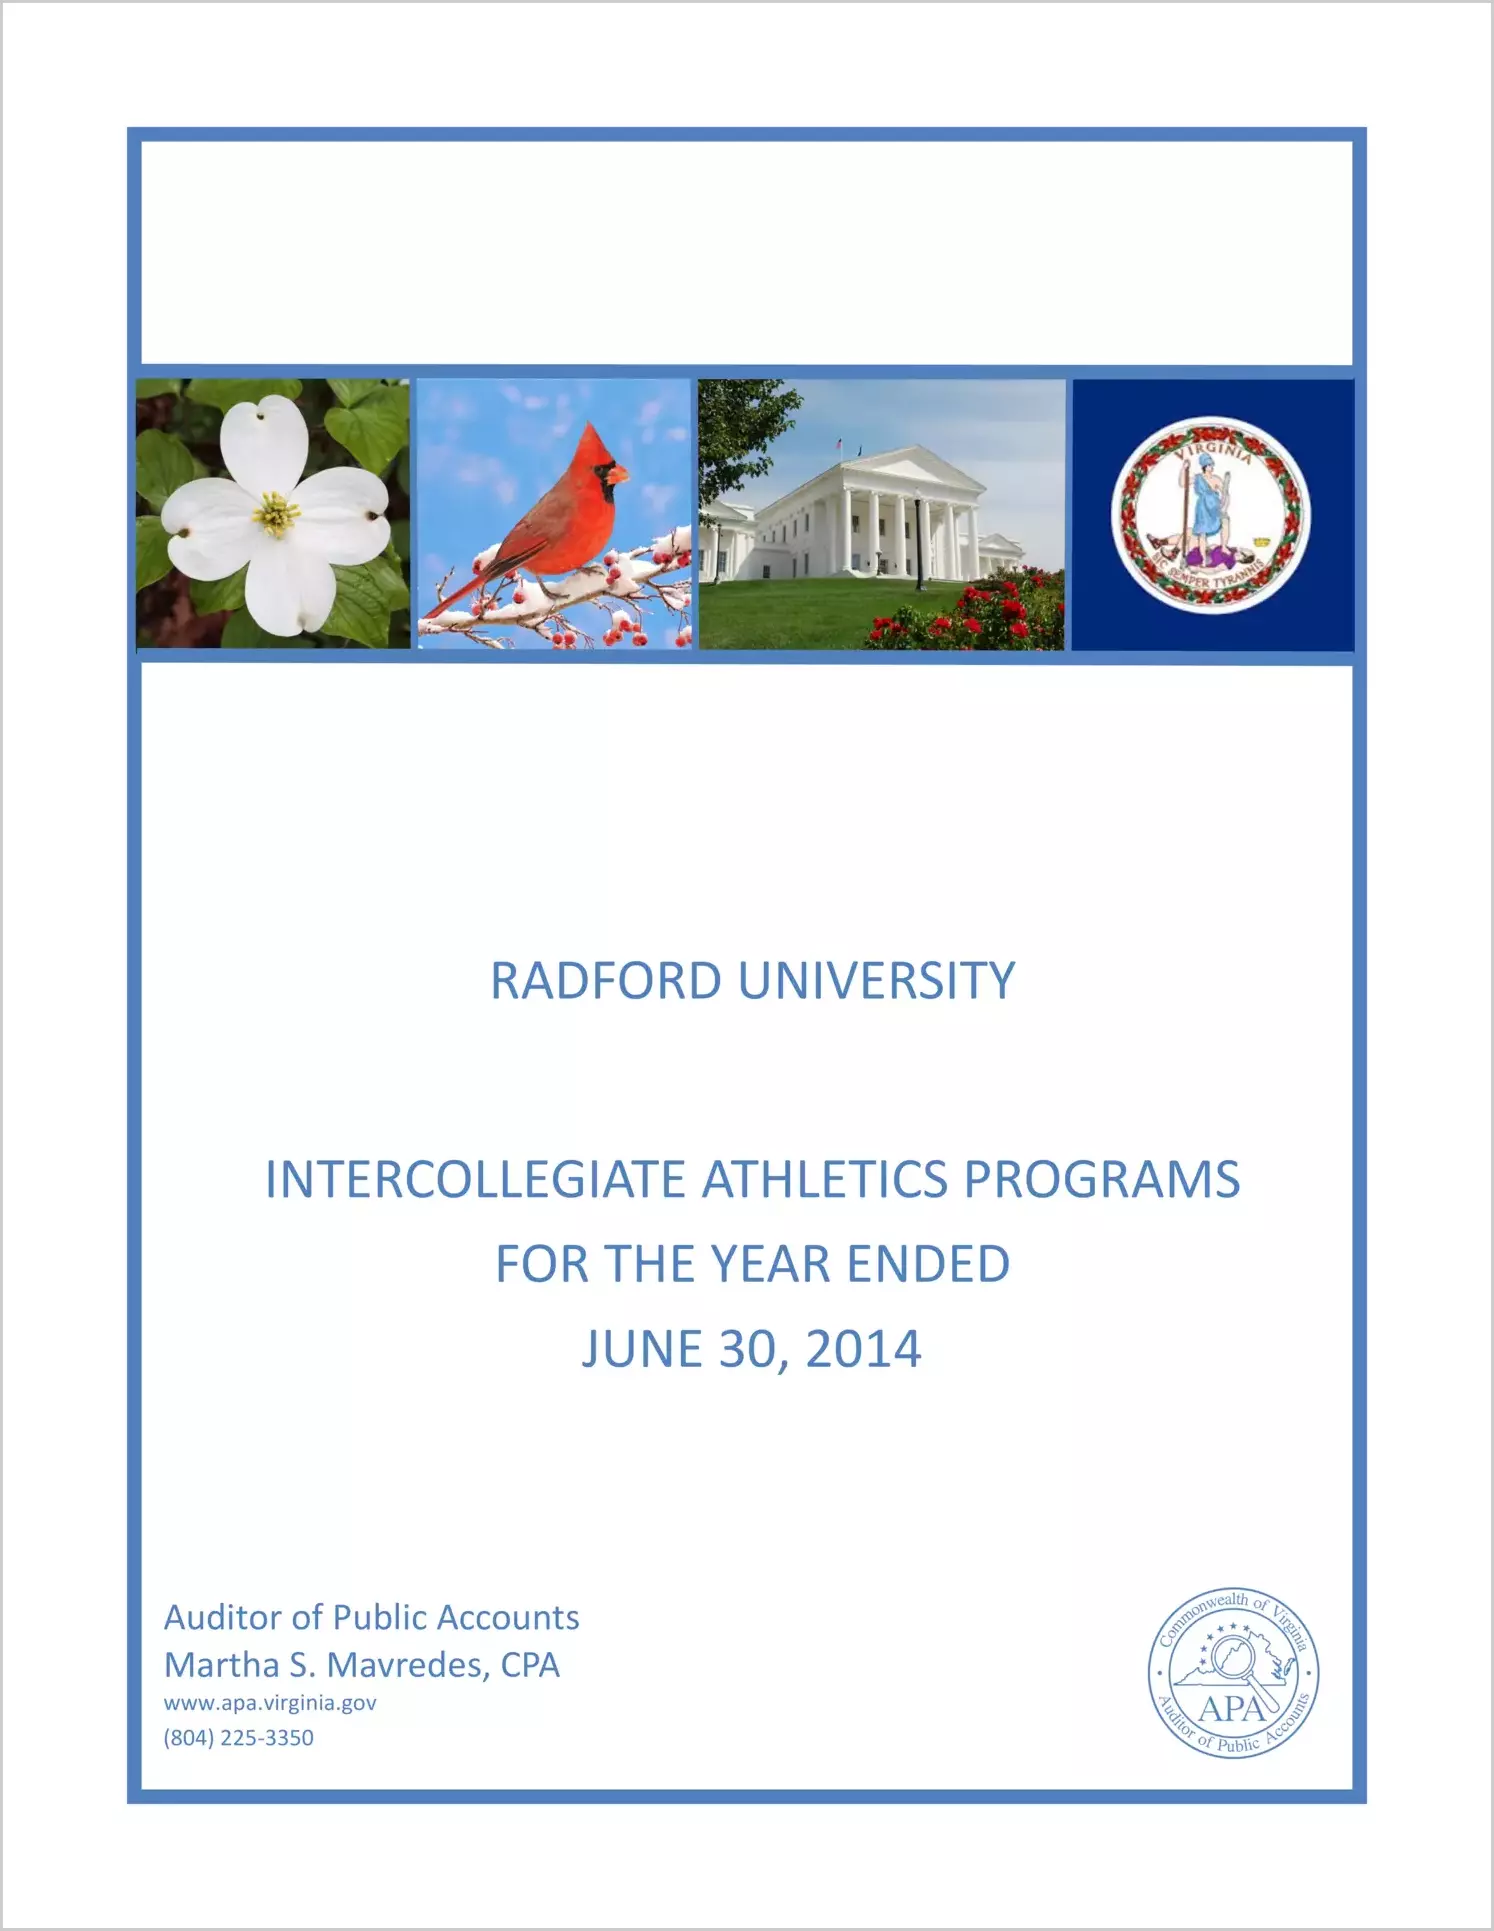 Radford University Intercollegiate Athletics Programs for the year ended June 30, 2014